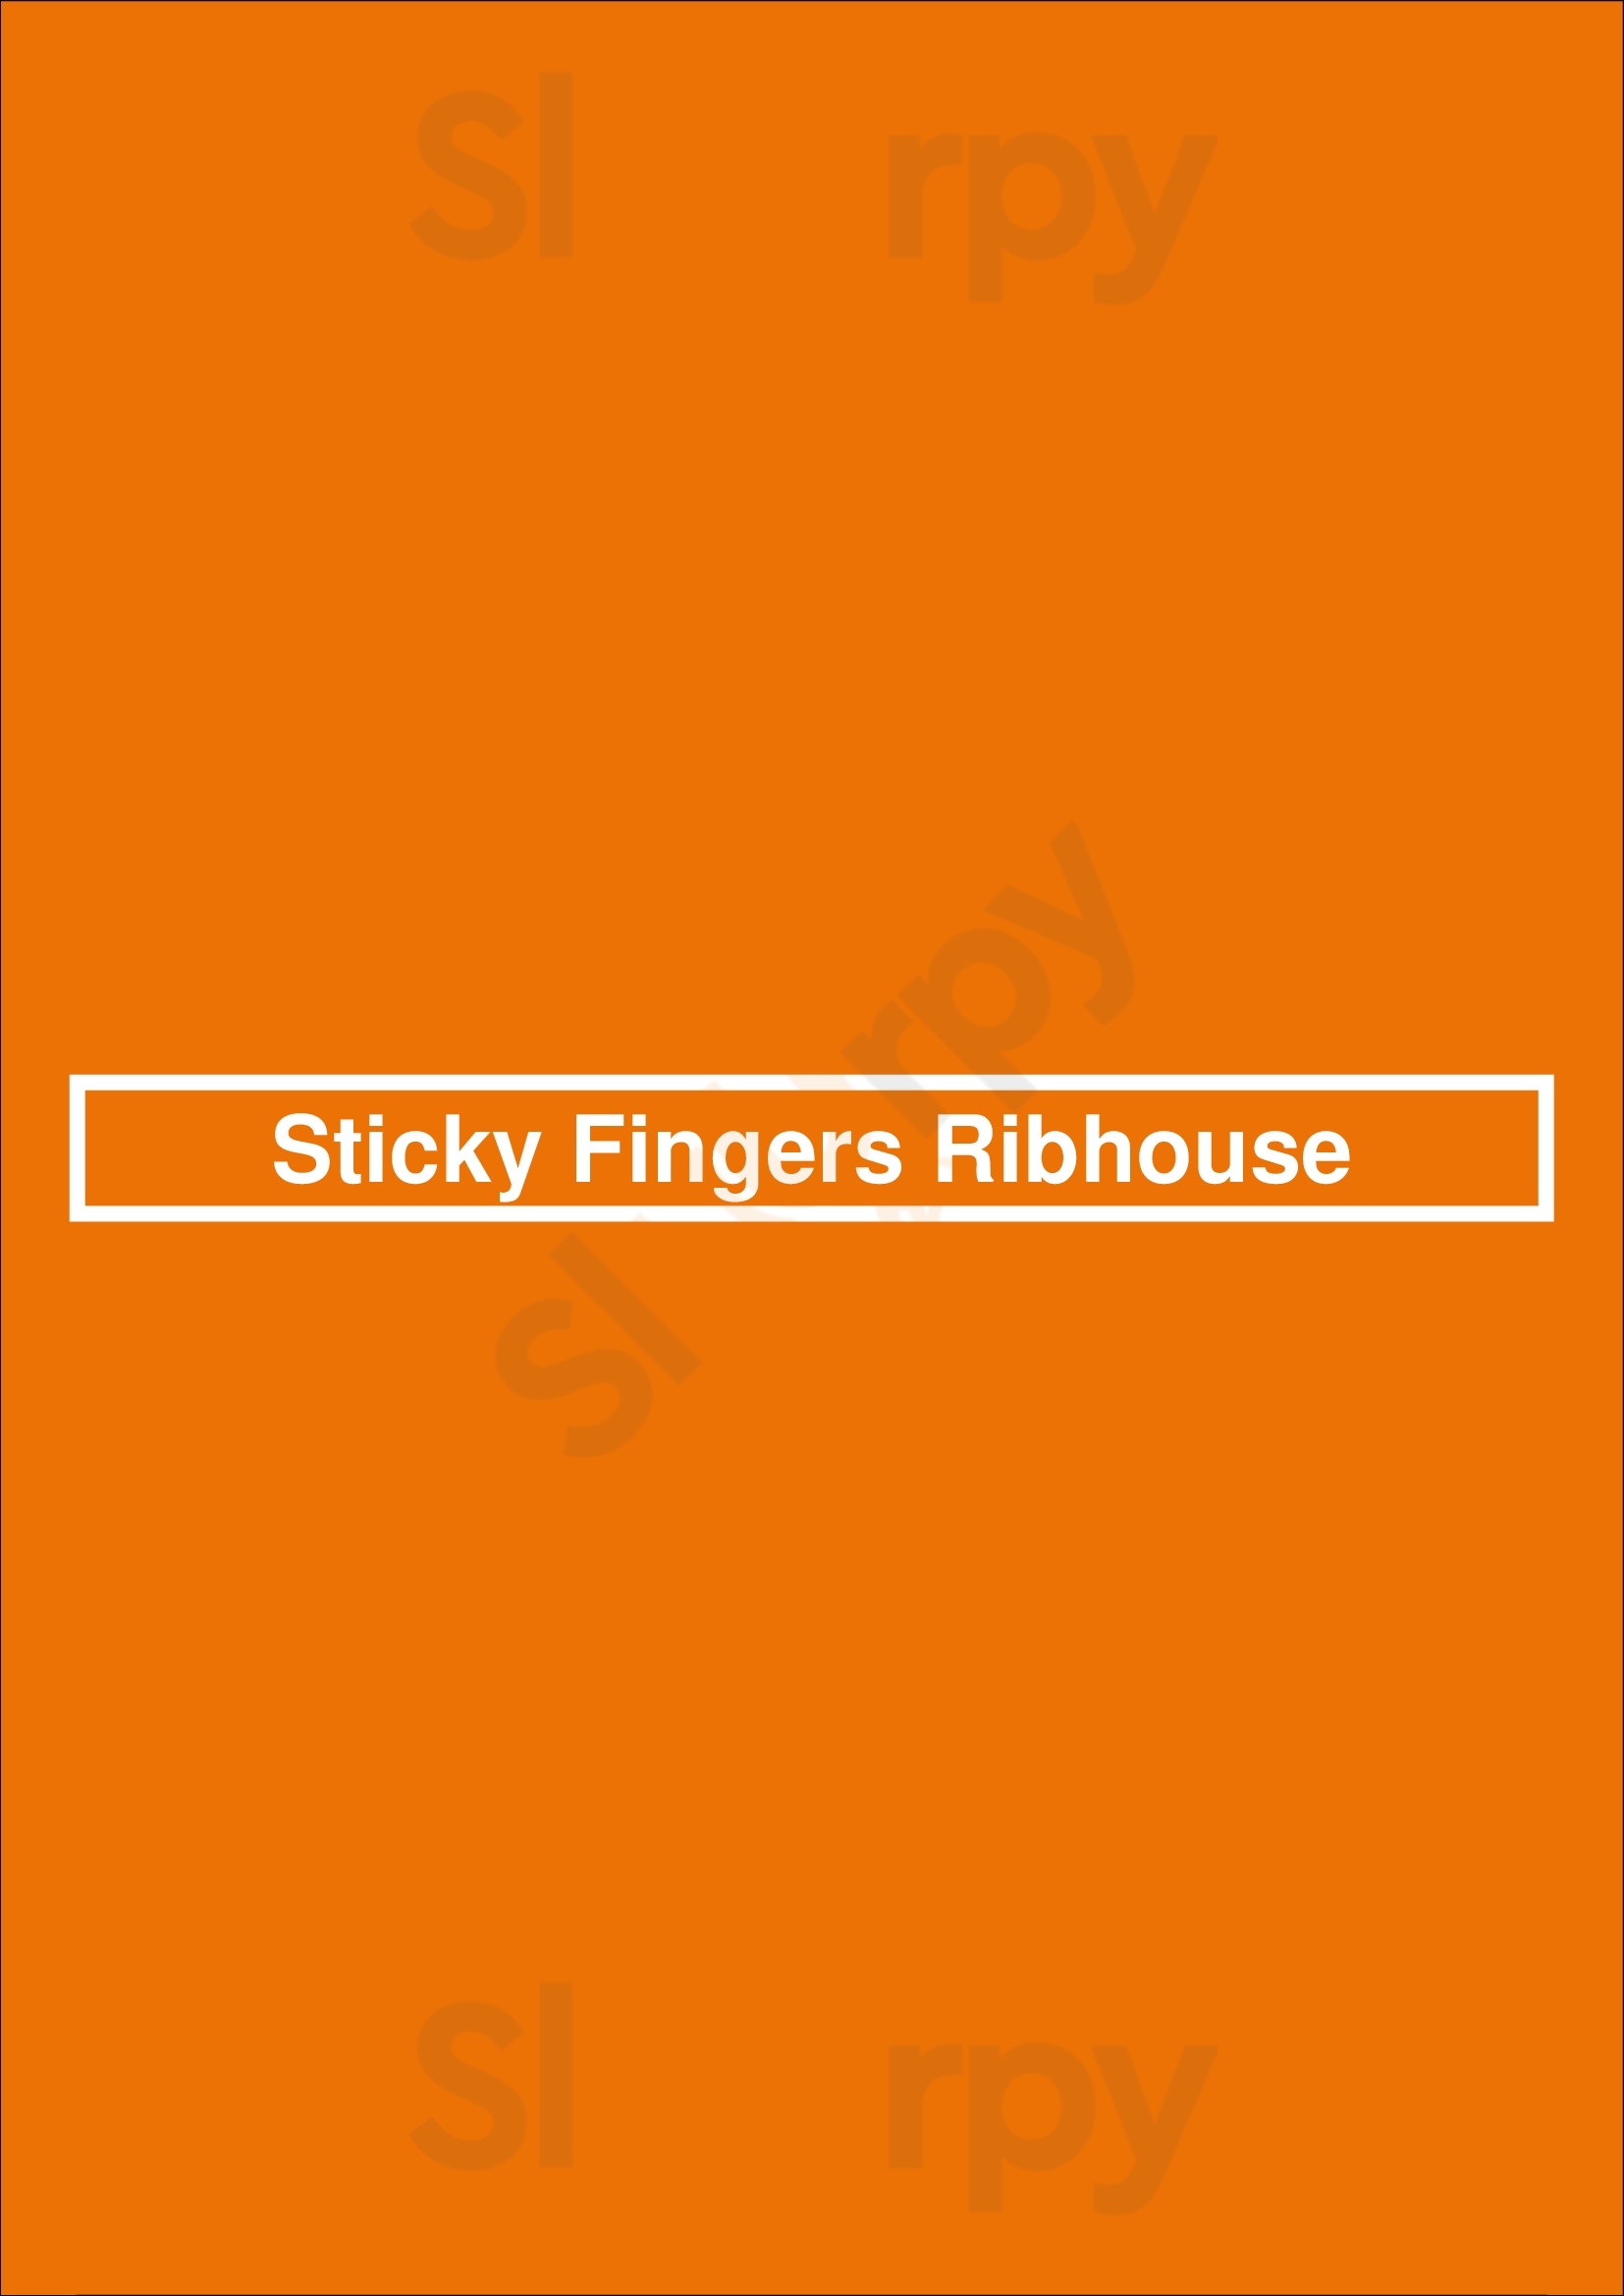 Sticky Fingers Ribhouse Greenville Menu - 1